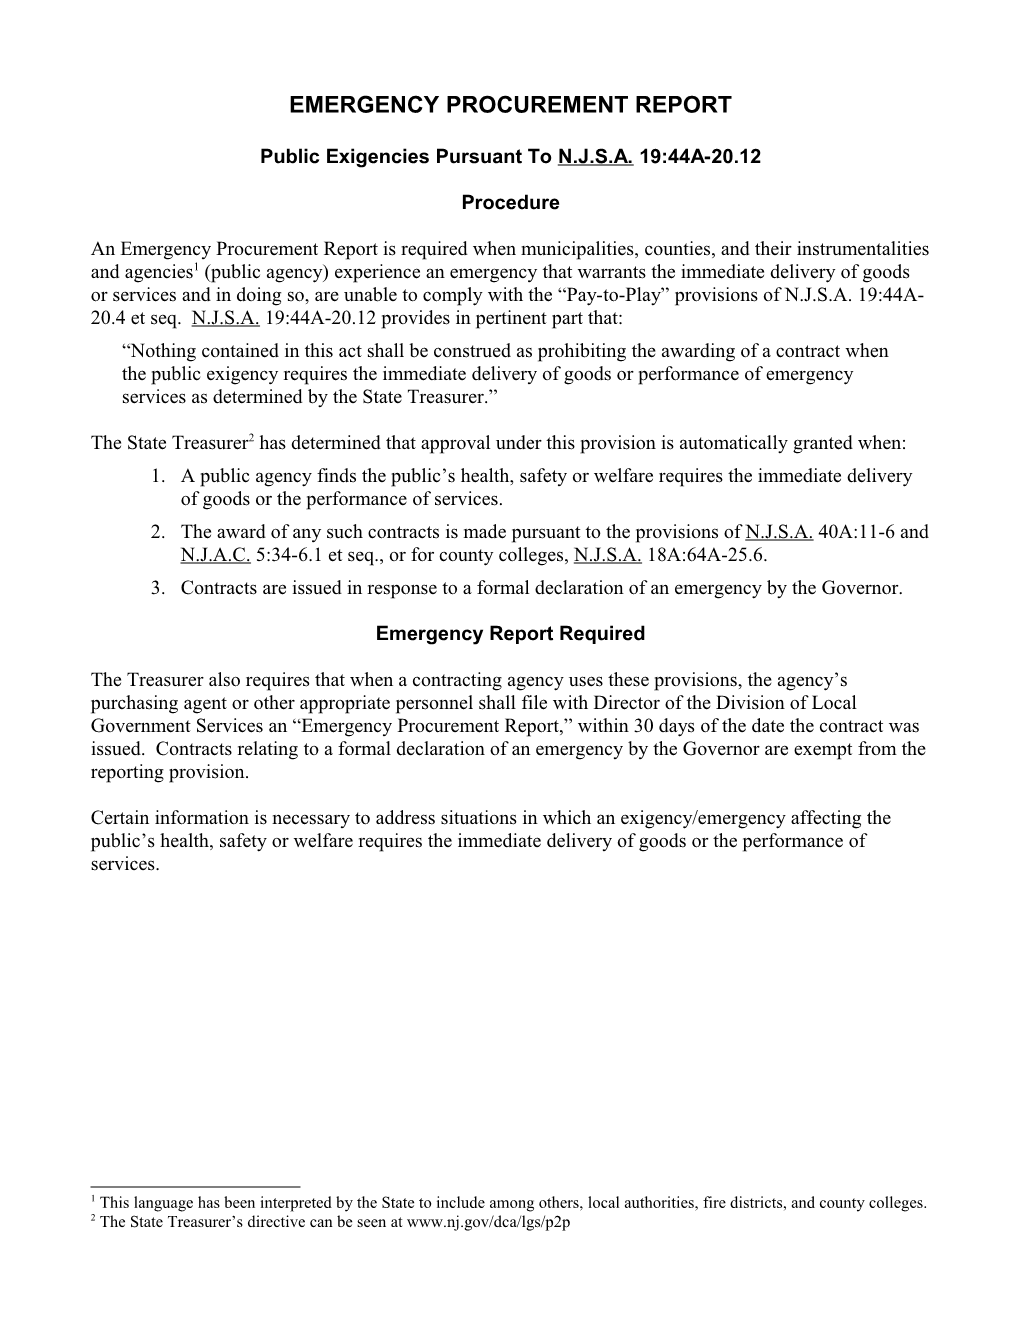 Emergency Procurement Report